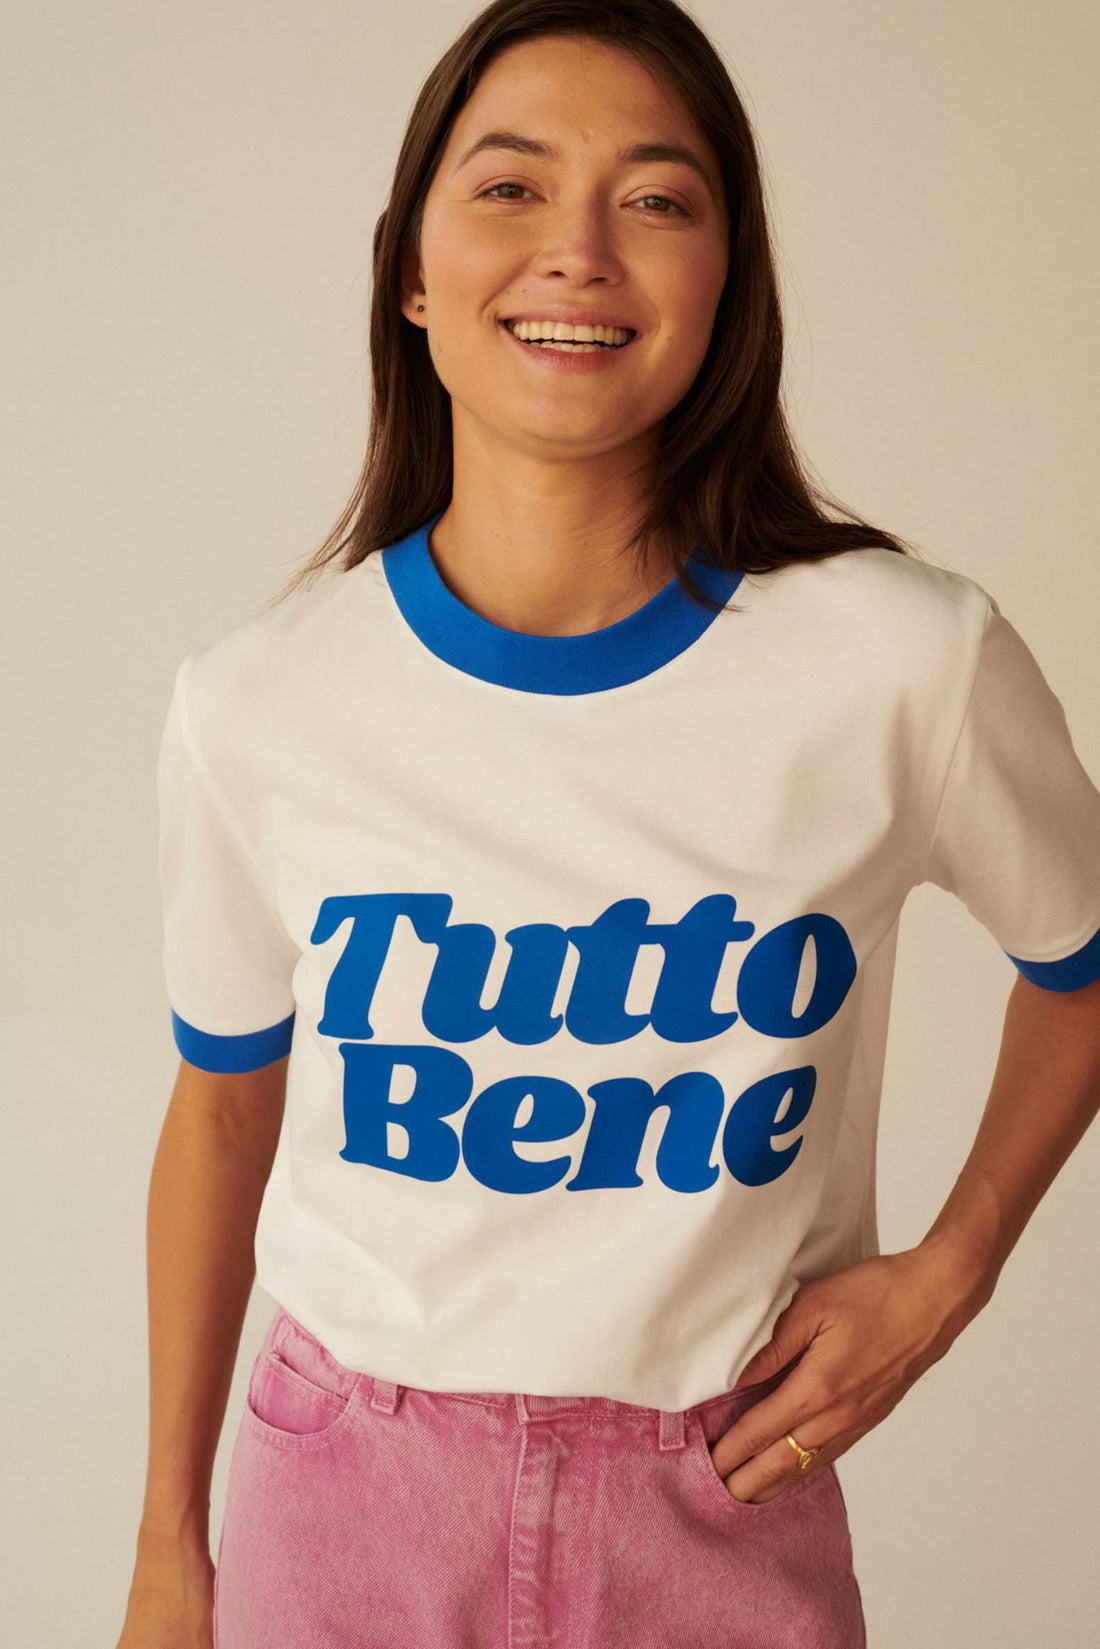 TUTTO BENE BLUE T-SHIRT